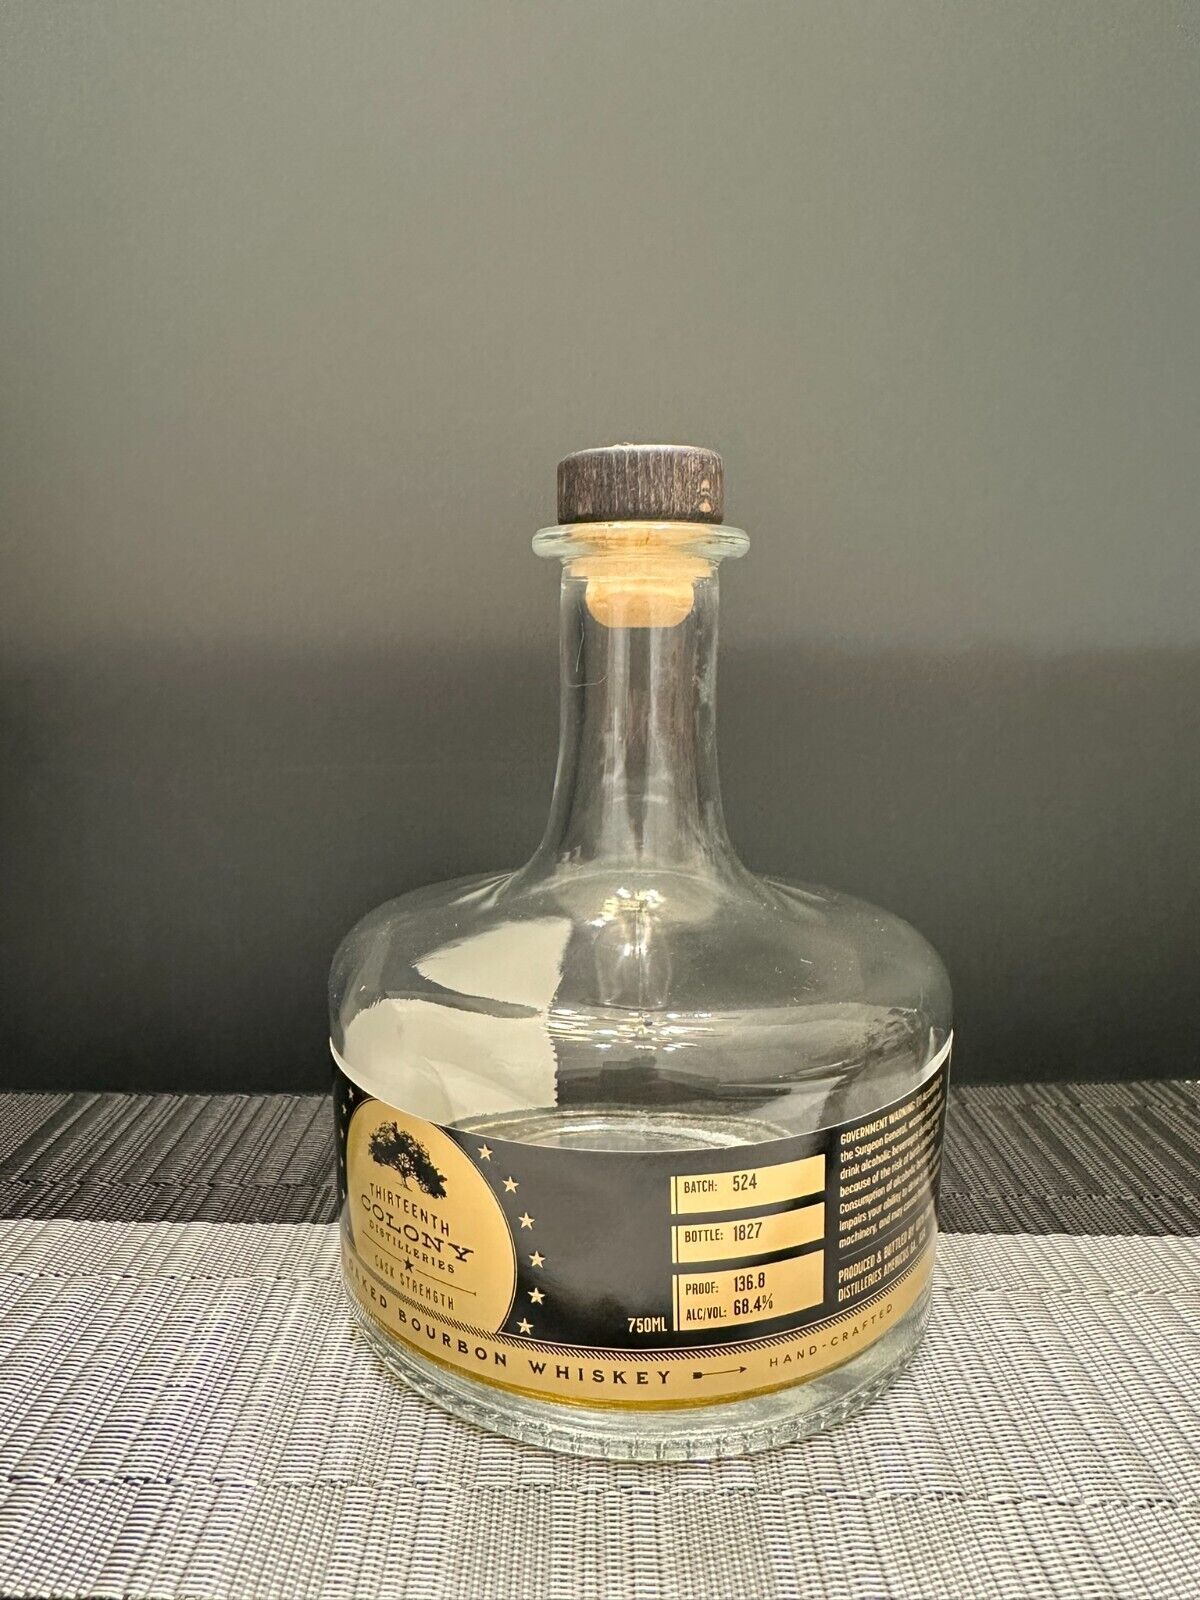 Thirteenth colony bourbon bottle very rare 13th CDO unrinsed Batch 2